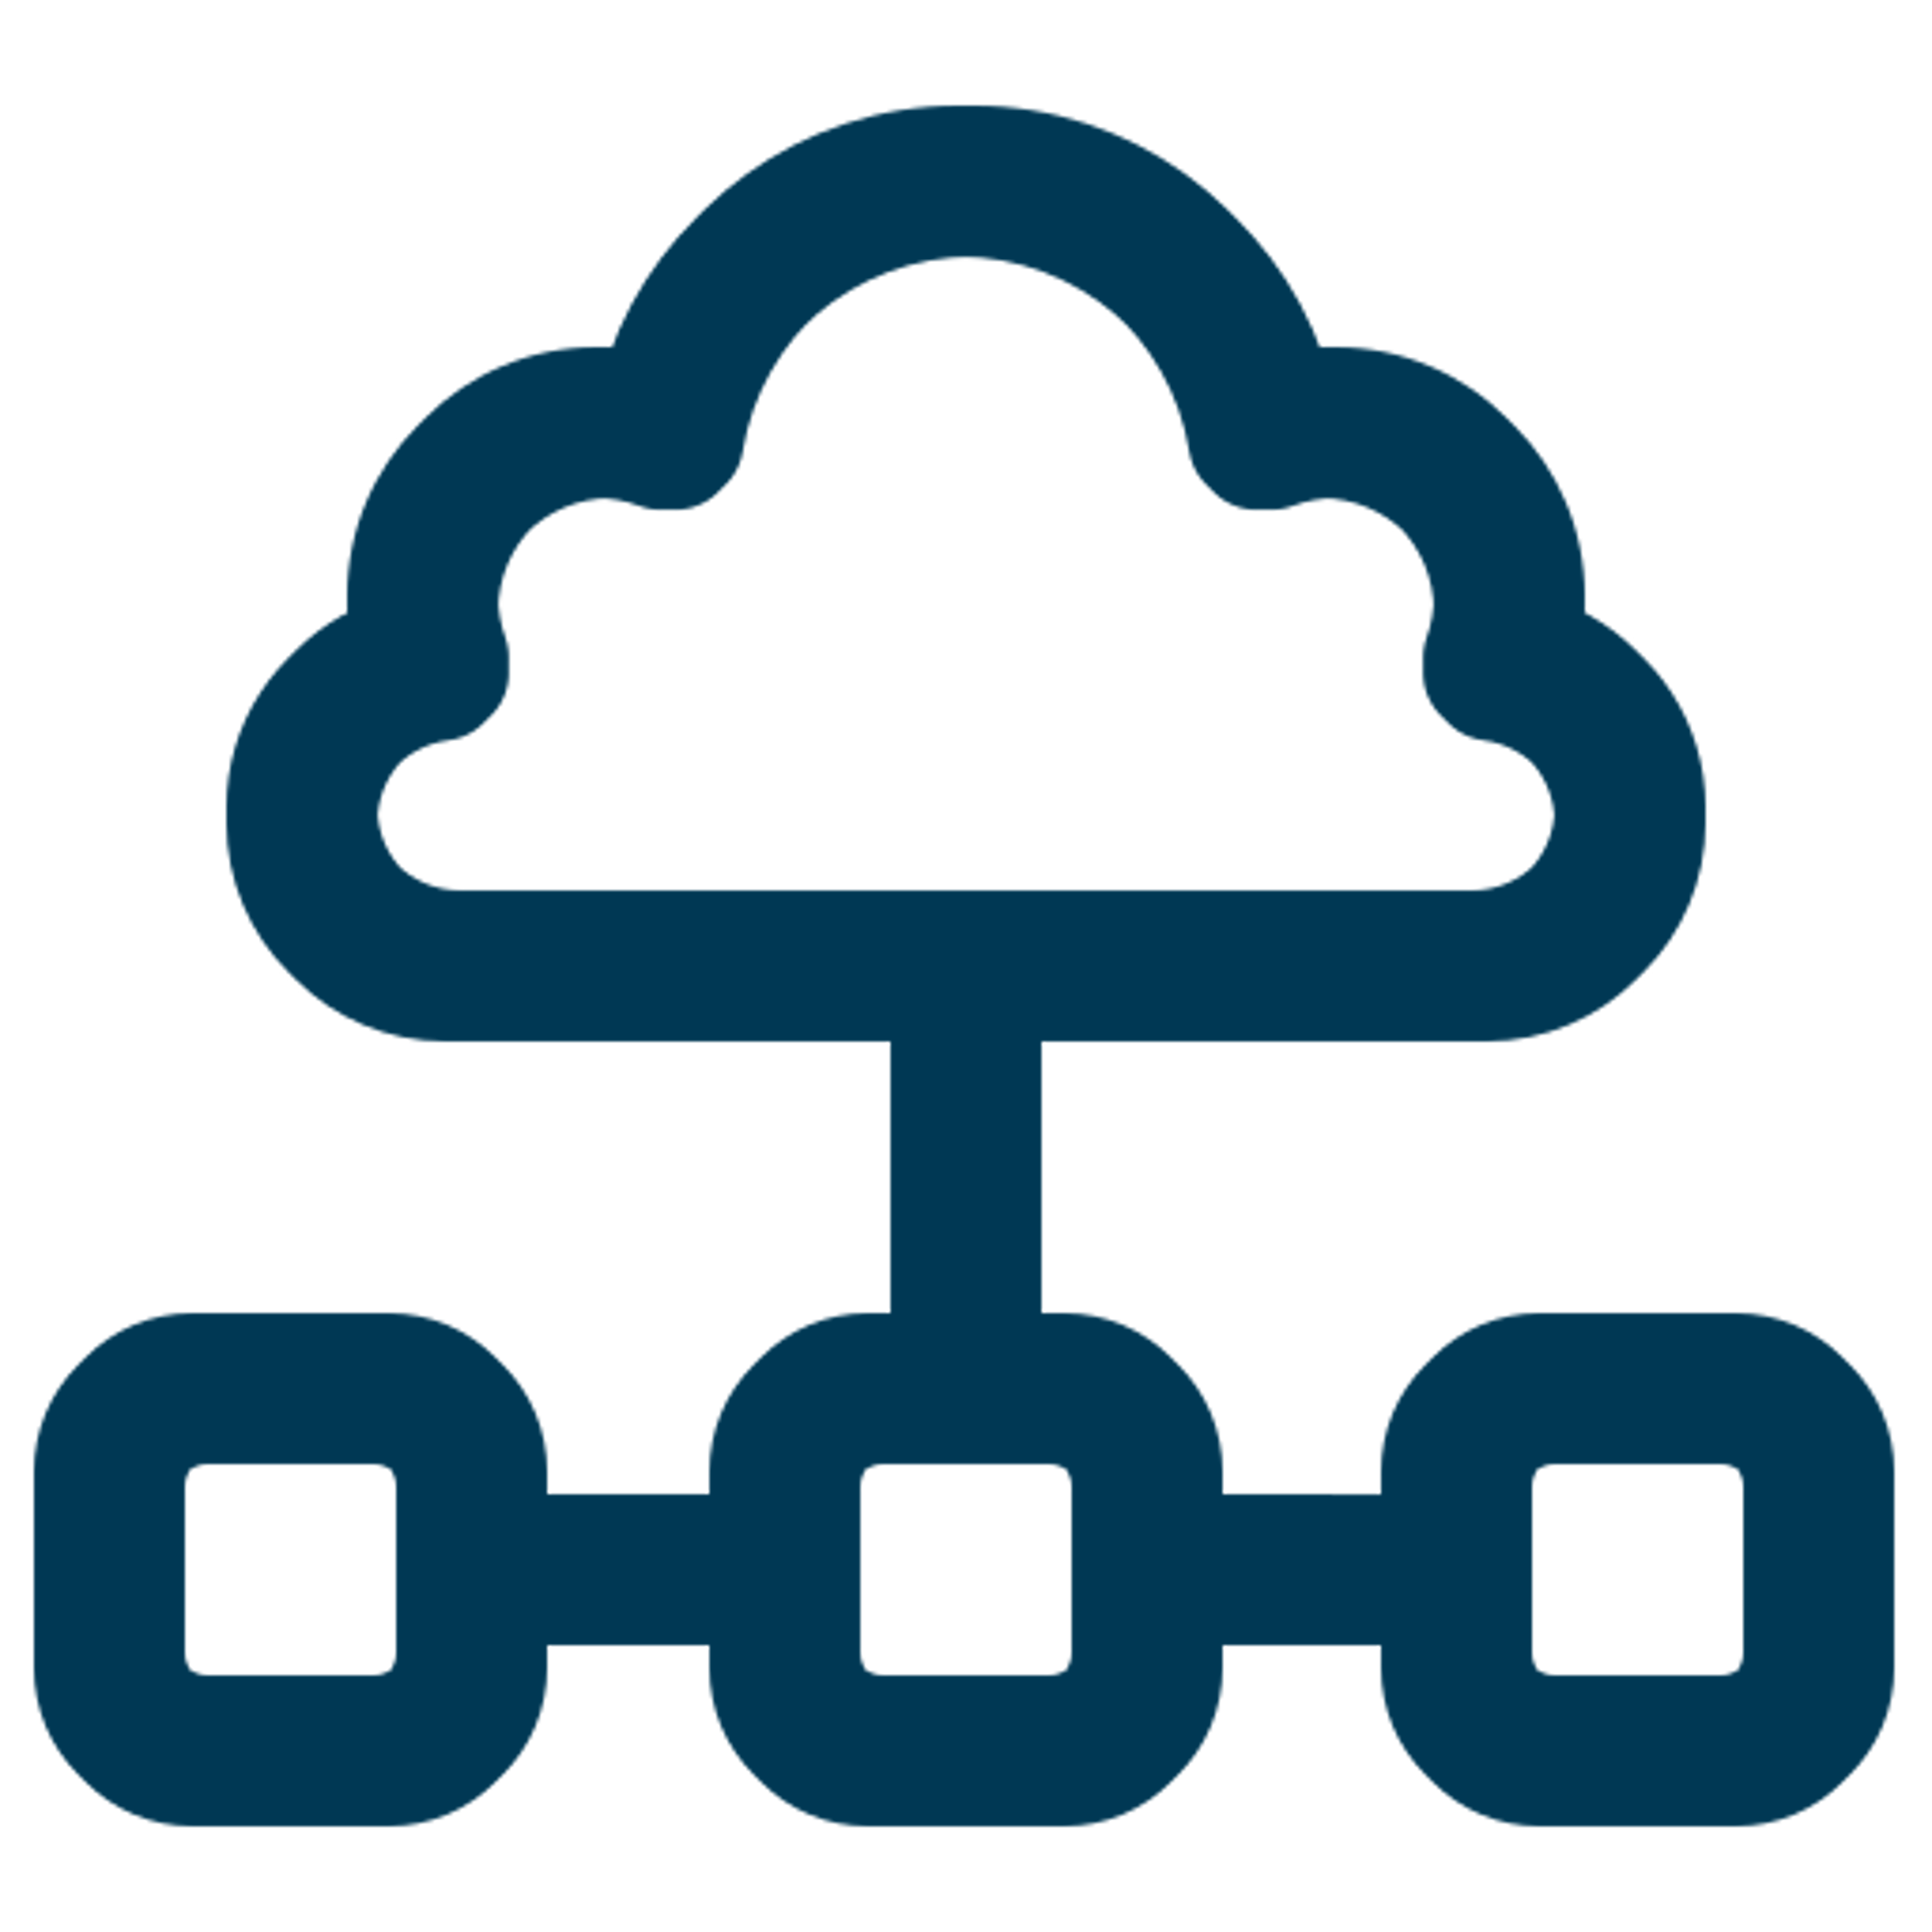 Icon Cloud Service